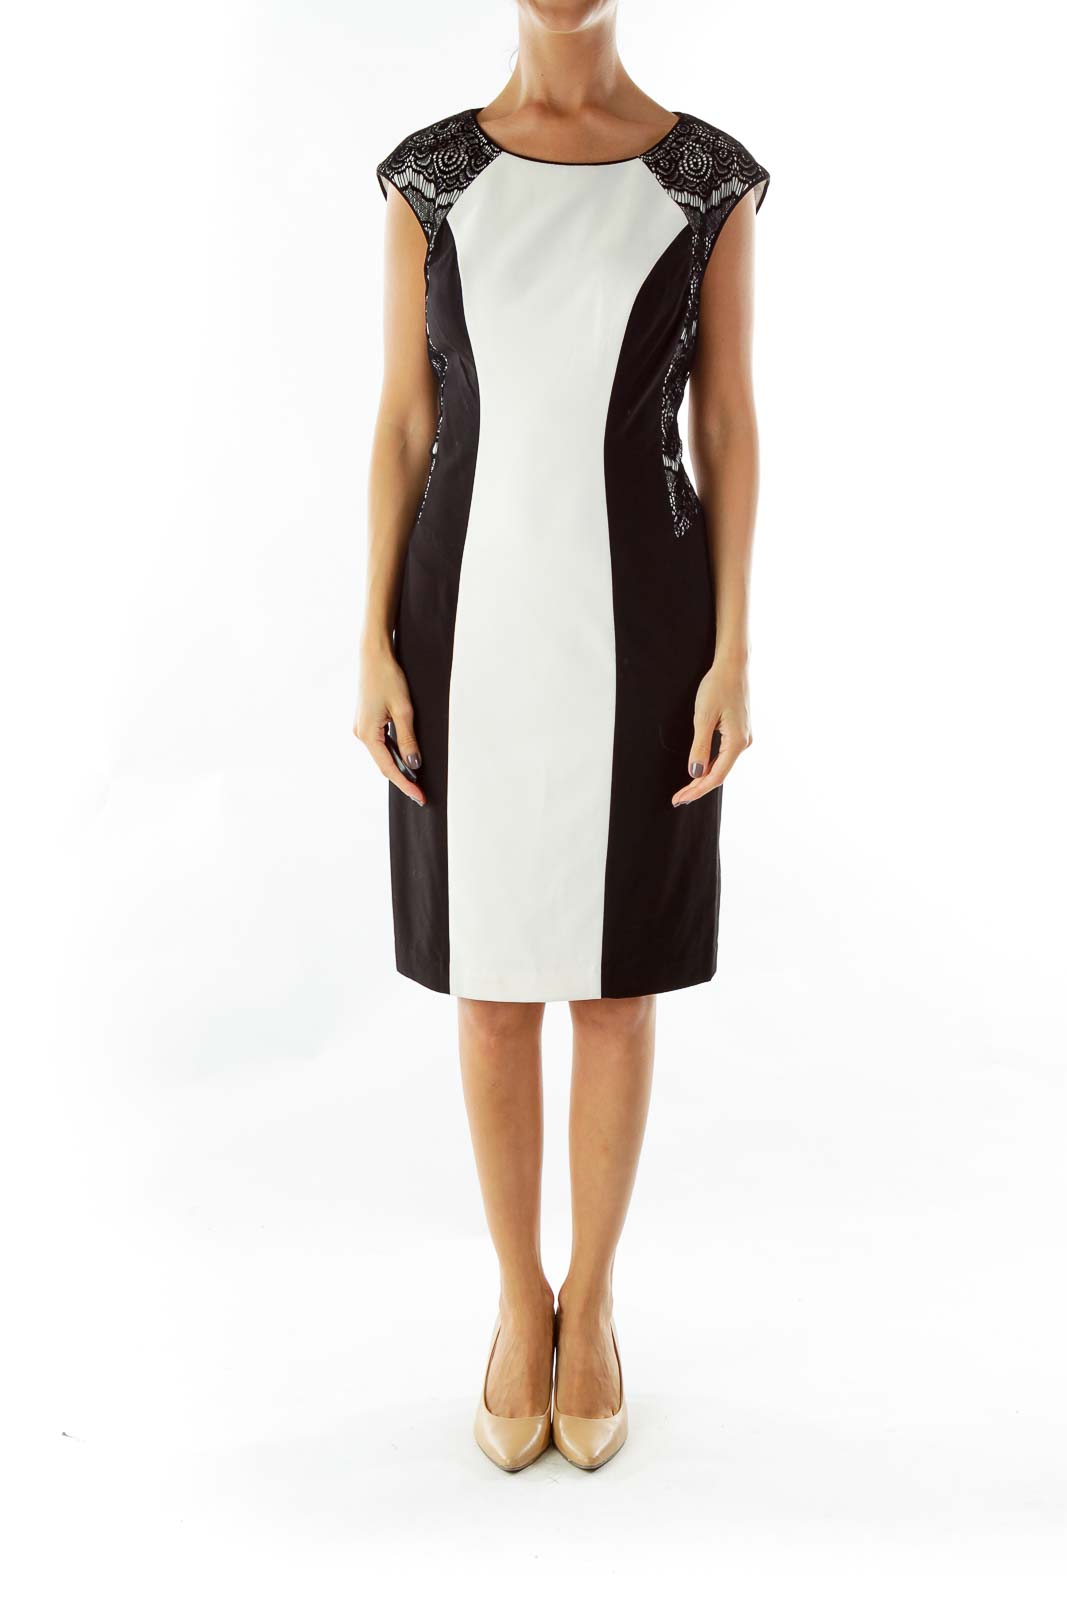 Calvin Klein - Black White Body Con Cocktail Dress Rayon Nylon Polyester  Spandex | SilkRoll